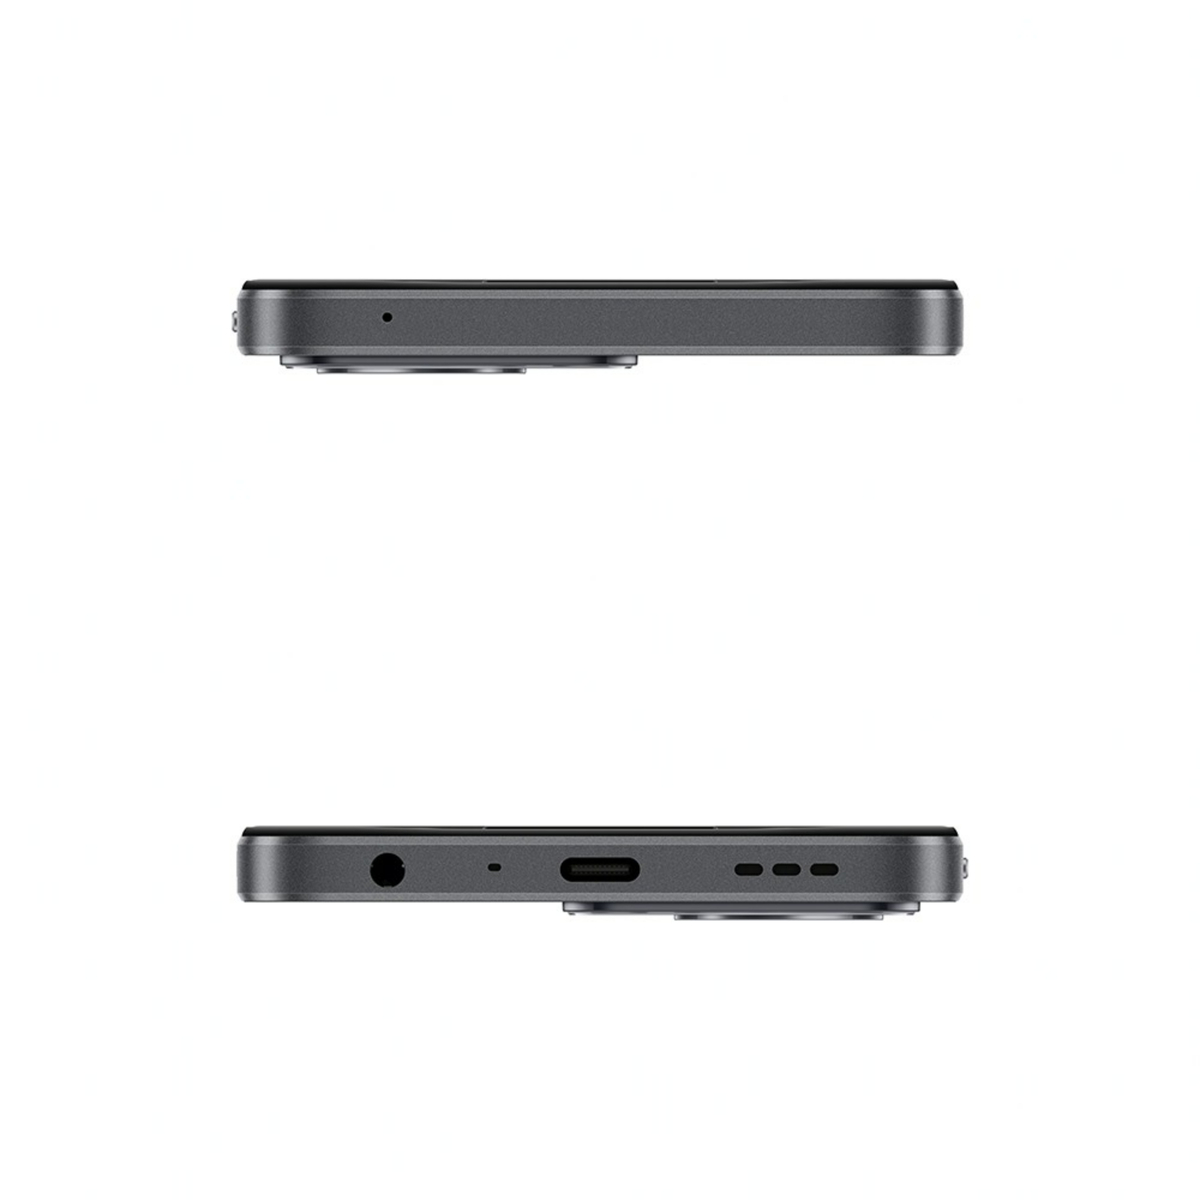 Oppo A79 5G Smartphone, 8 GB RAM, 256 GB Storage, Black, CPH2557